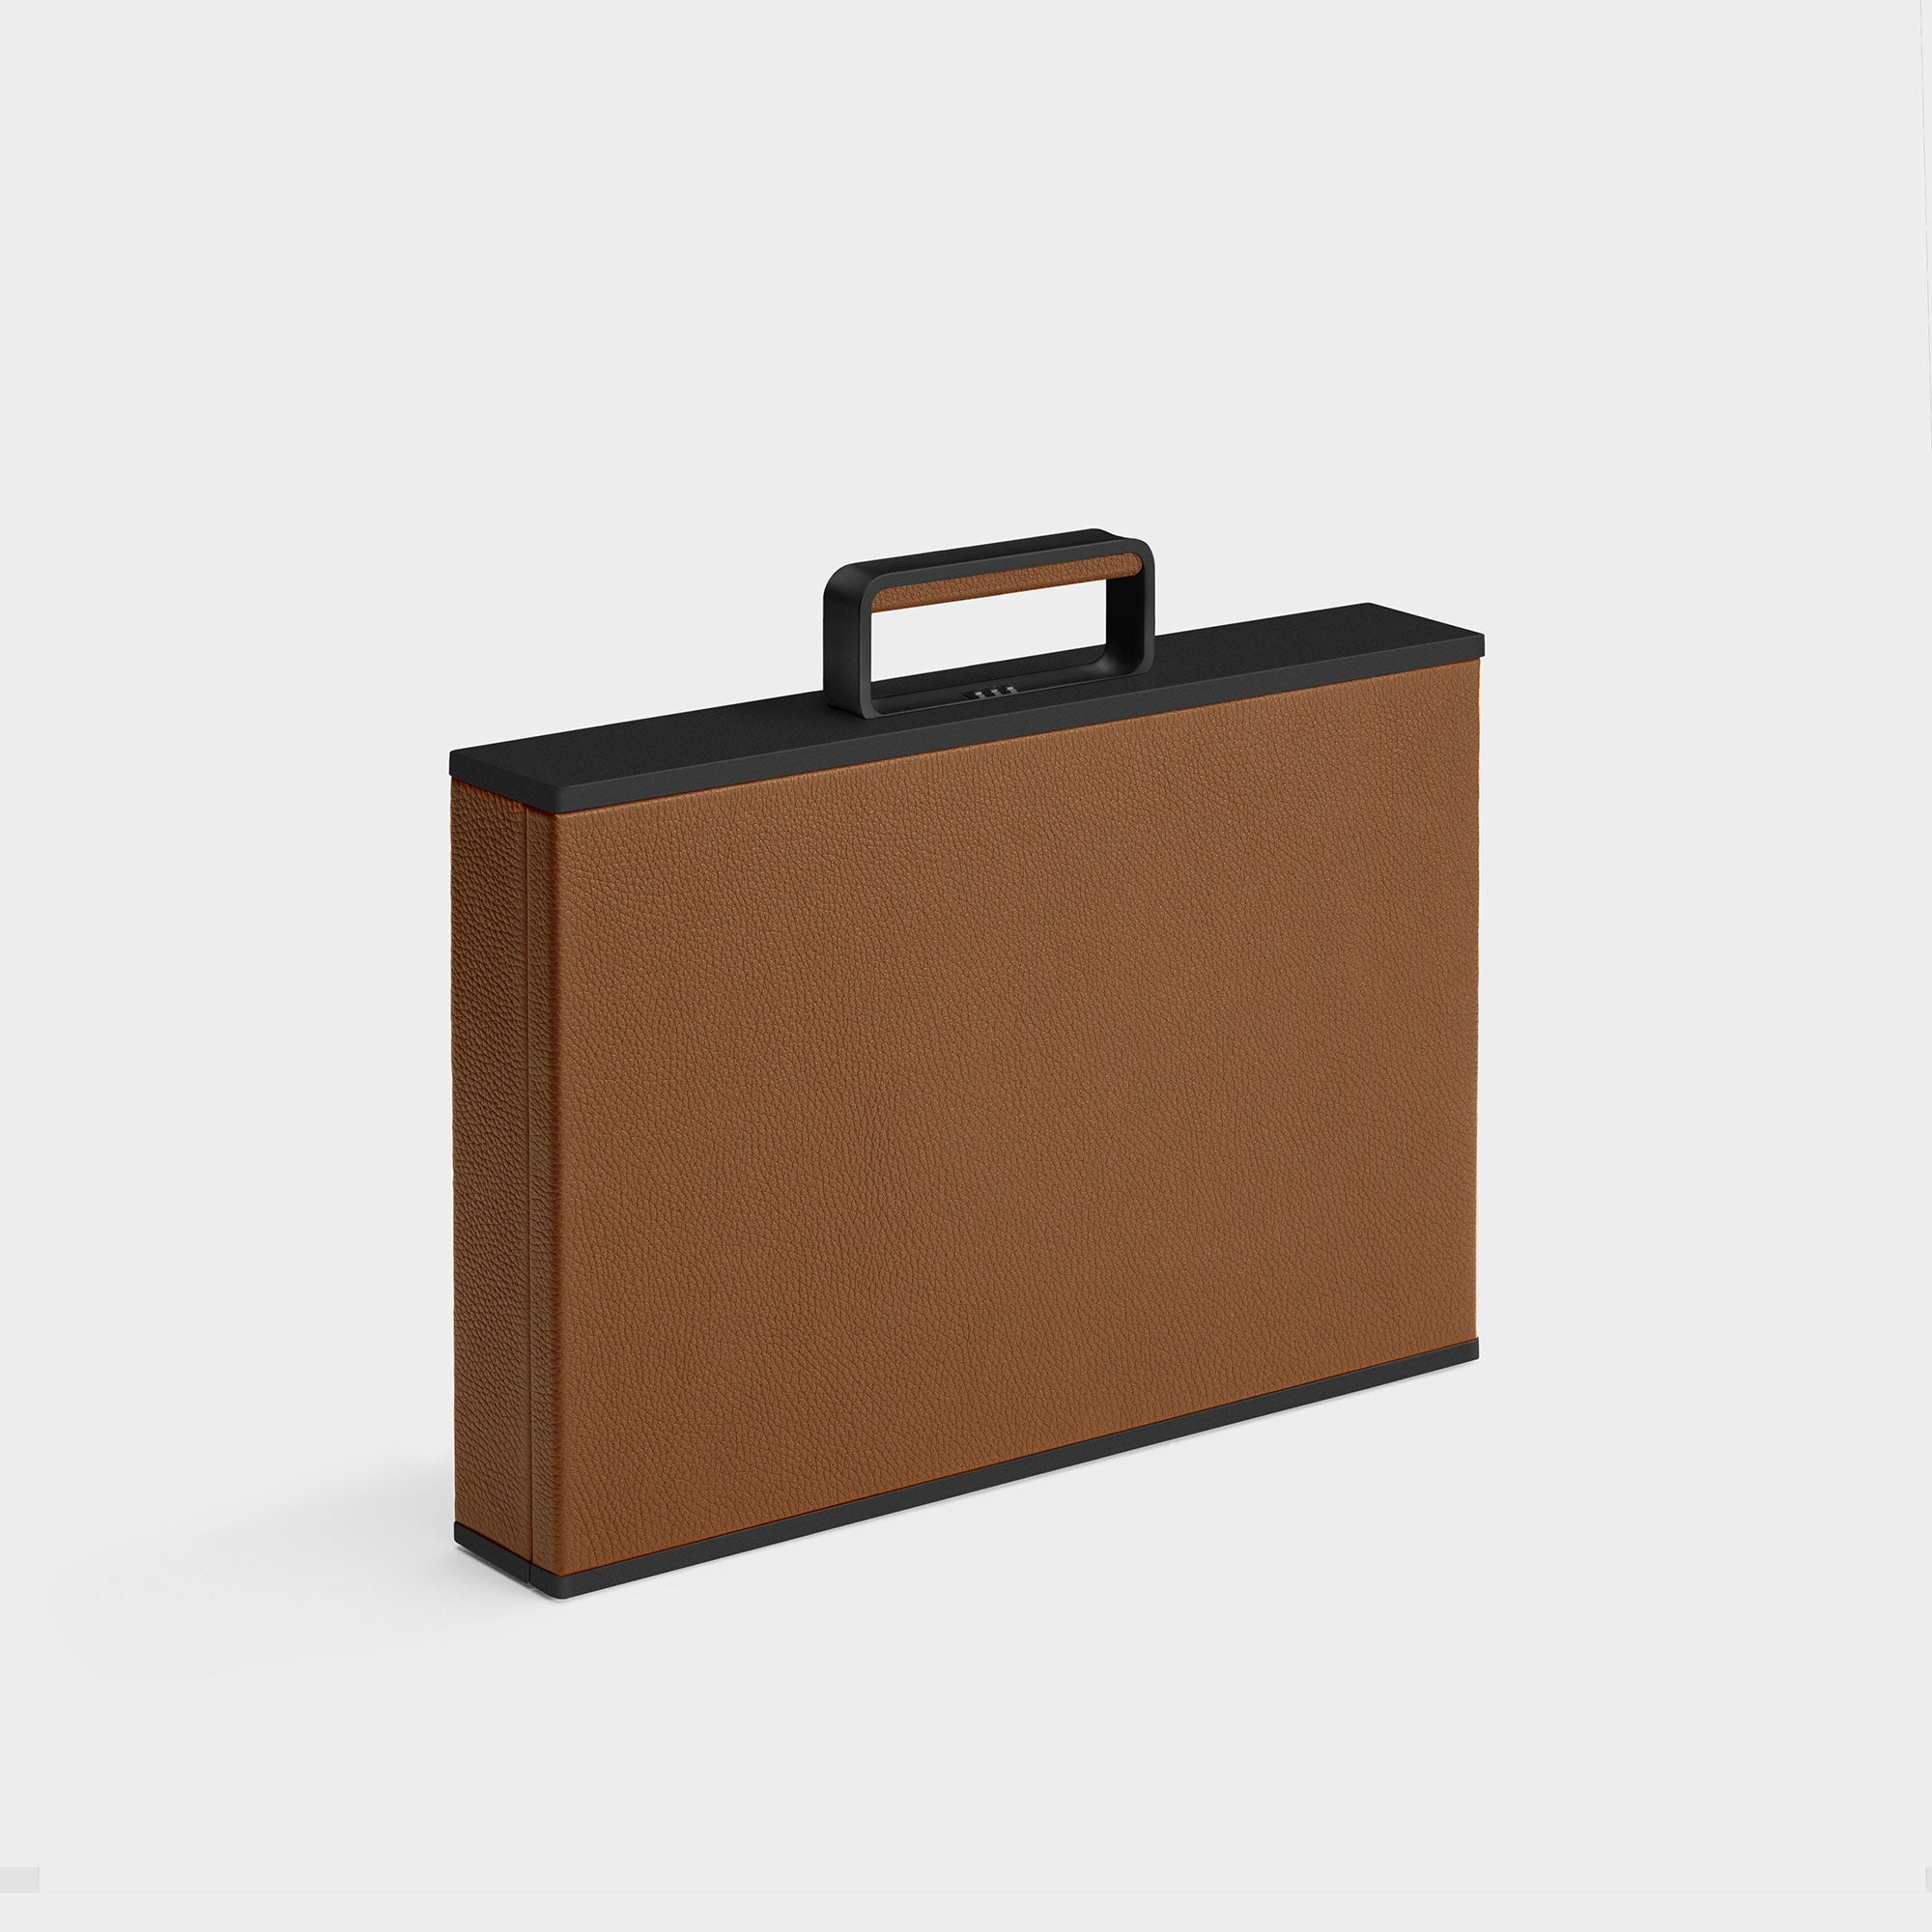 Designer Mackenzie briefcase in tan with black contrasting